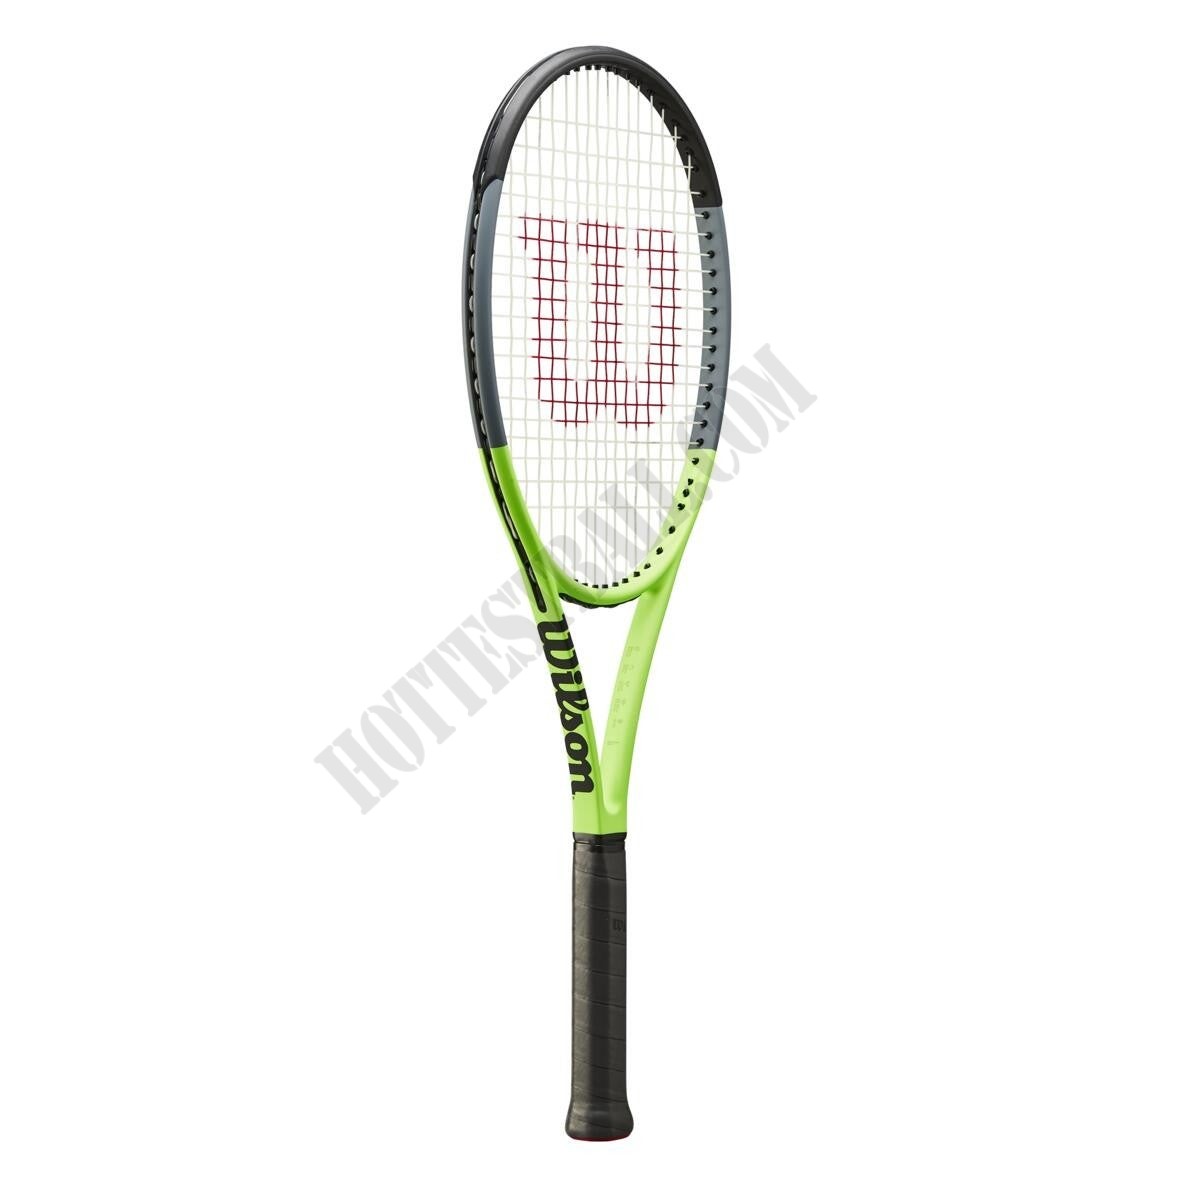 Blade 98 (16x19) v7 Reverse Tennis Racket - Wilson Discount Store - Blade 98 (16x19) v7 Reverse Tennis Racket - Wilson Discount Store